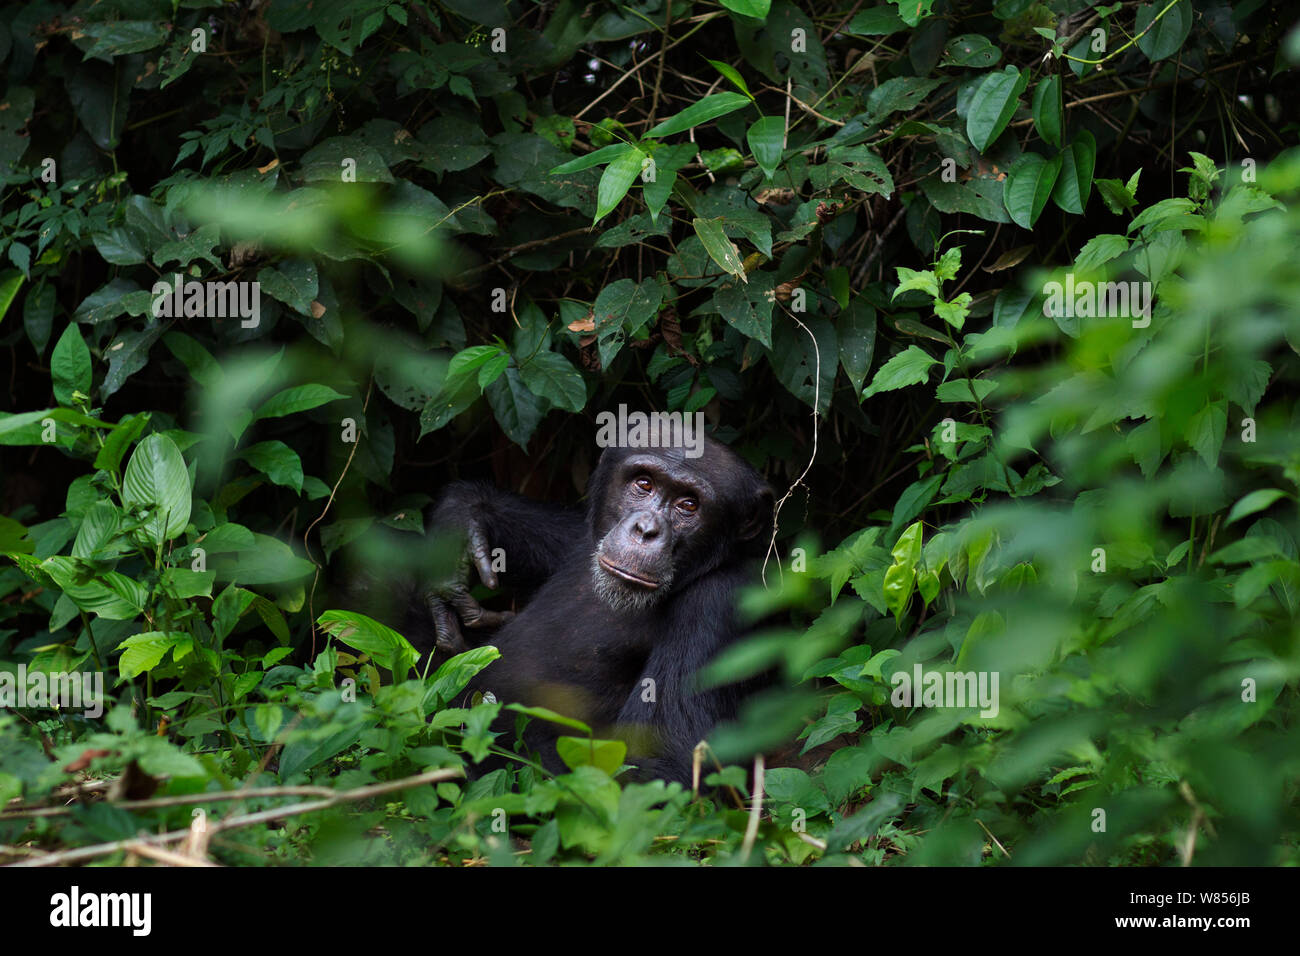 Western chimpanzee (Pan troglodytes verus)   young male 'Peley' aged 12 years sitting amongst vegetation, Bossou Forest, Mont Nimba, Guinea. December 2010. Stock Photo